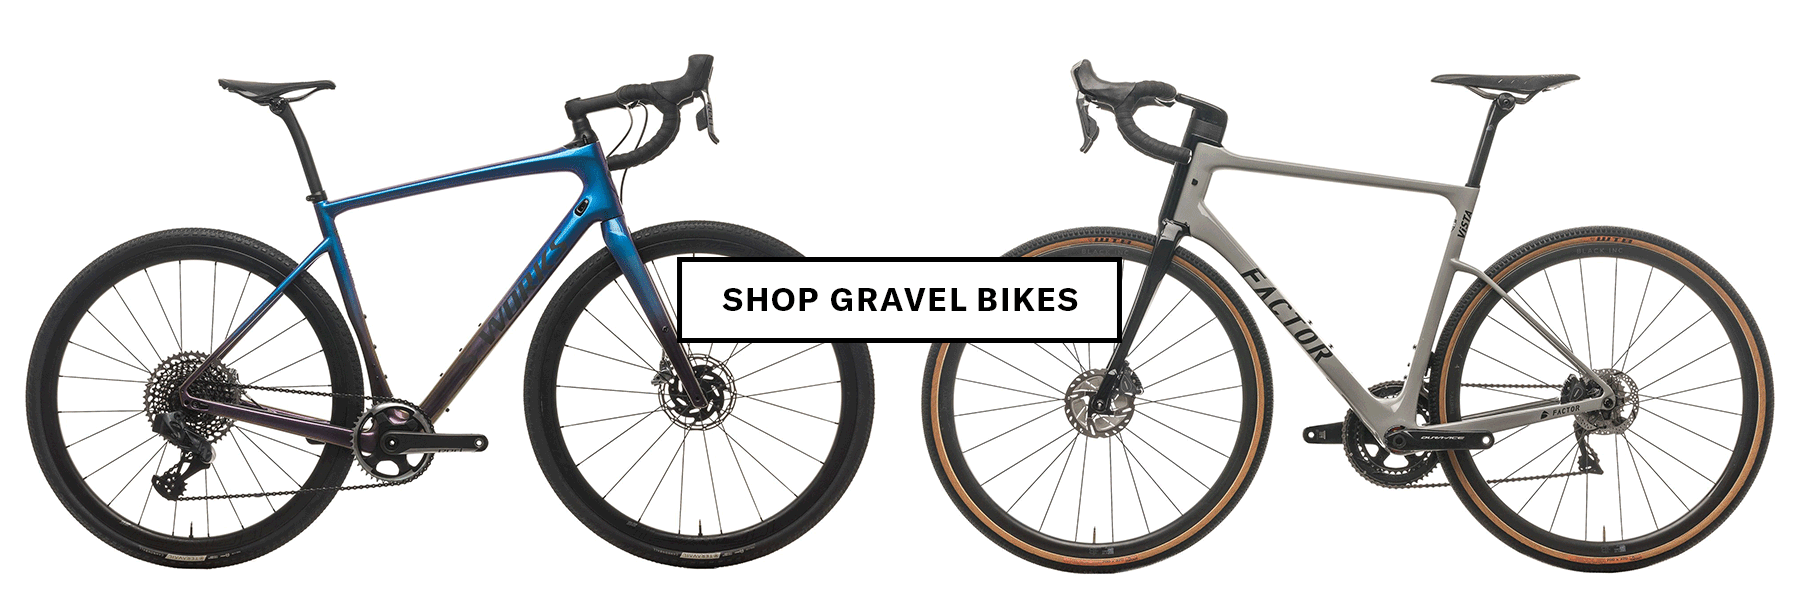 Shop used gravel bikes